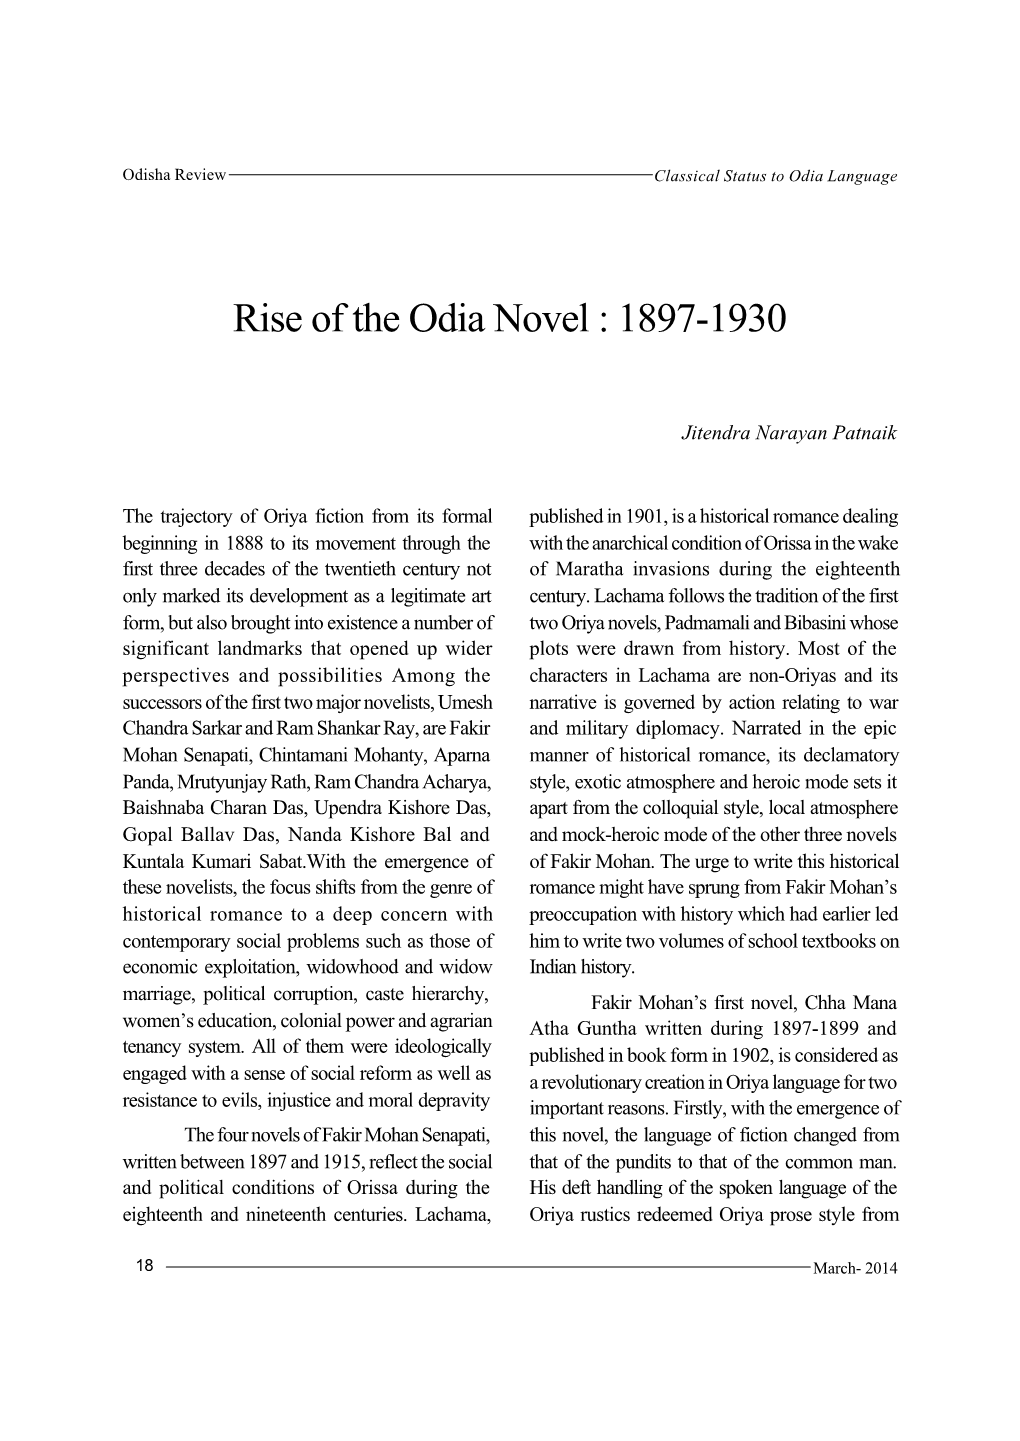 Rise of the Odia Novel : 1897-1930